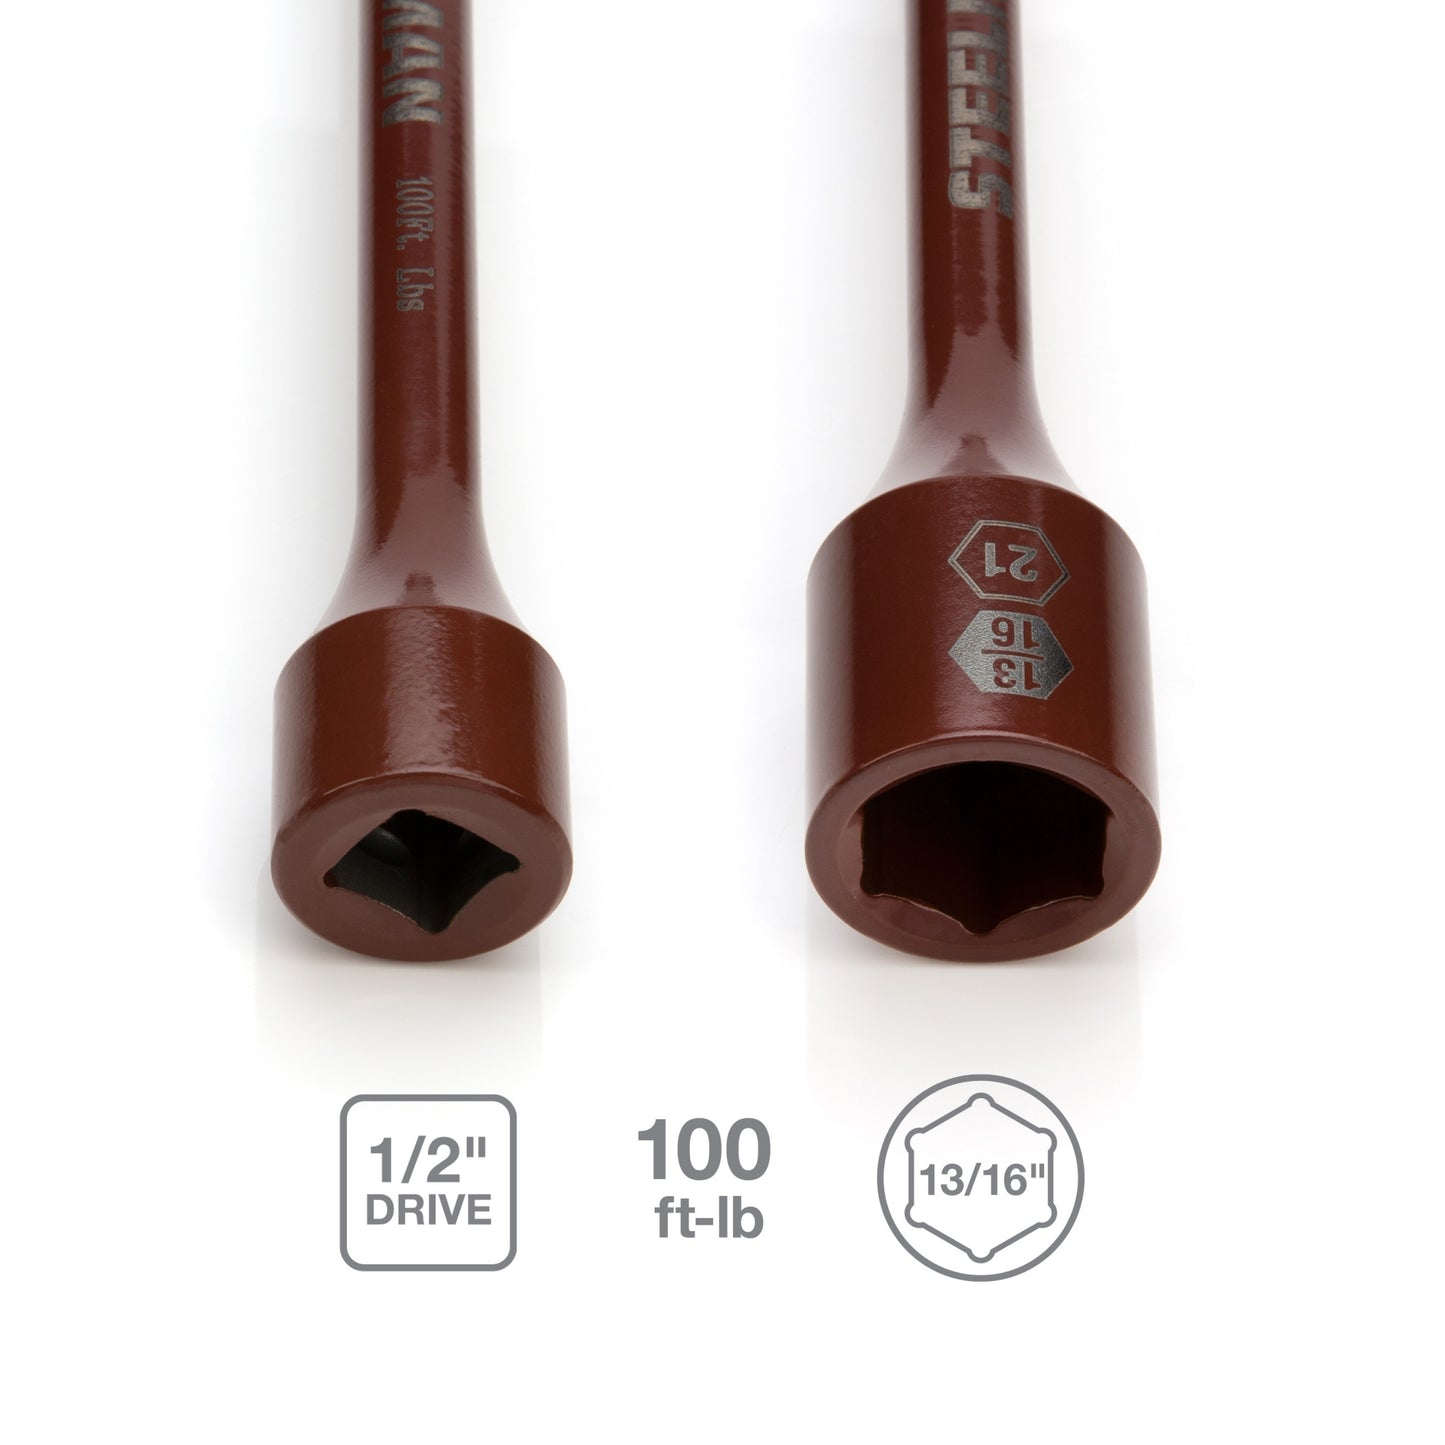 1/2-Inch Drive x 13/16-Inch 100 ft-lb Torque Stick, Dark Brown